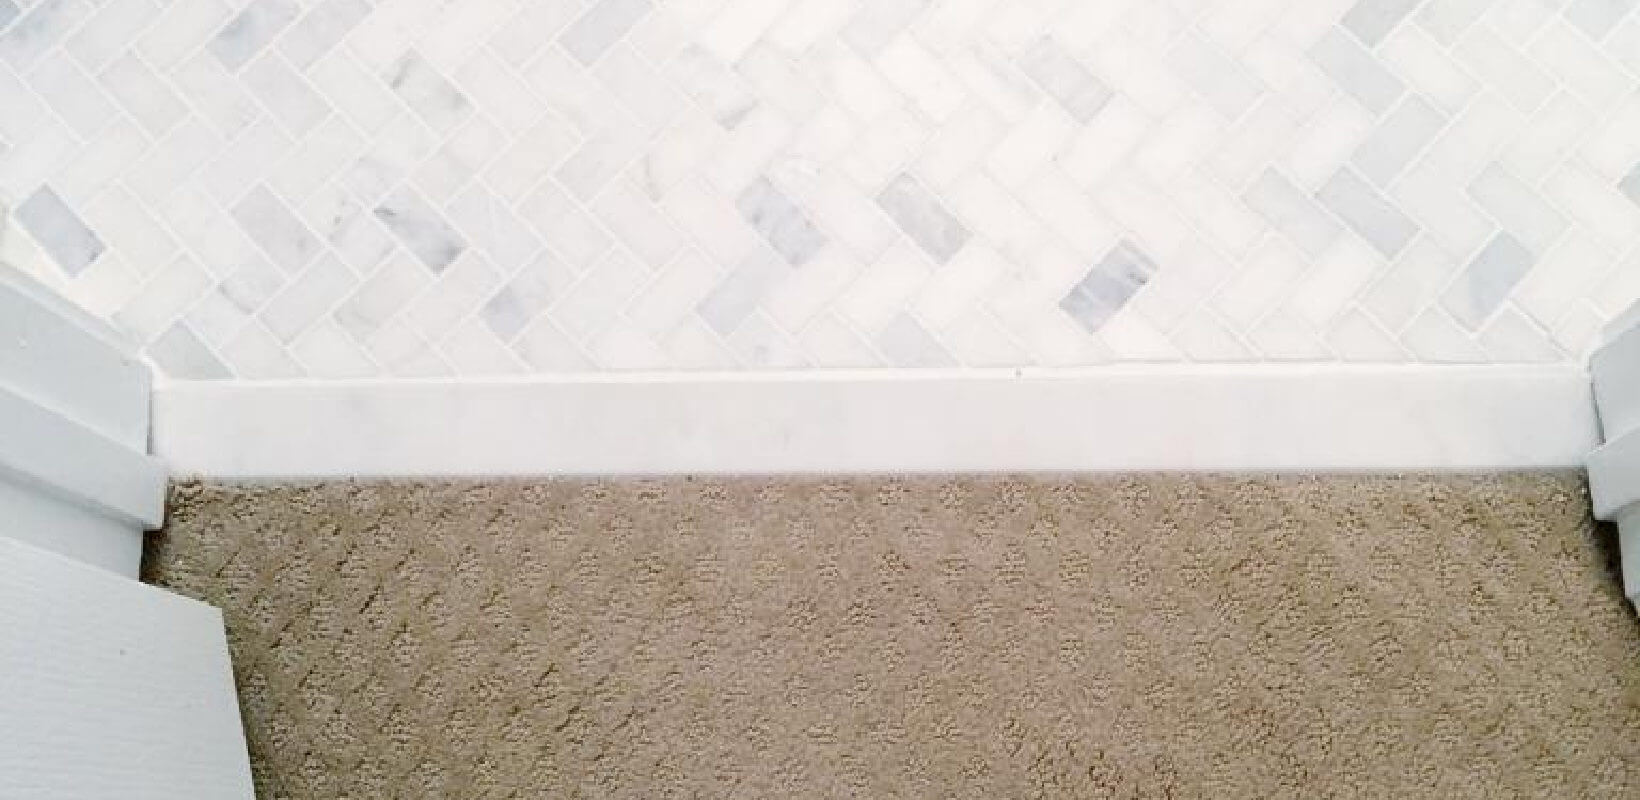 Seamless carpet to tile transition